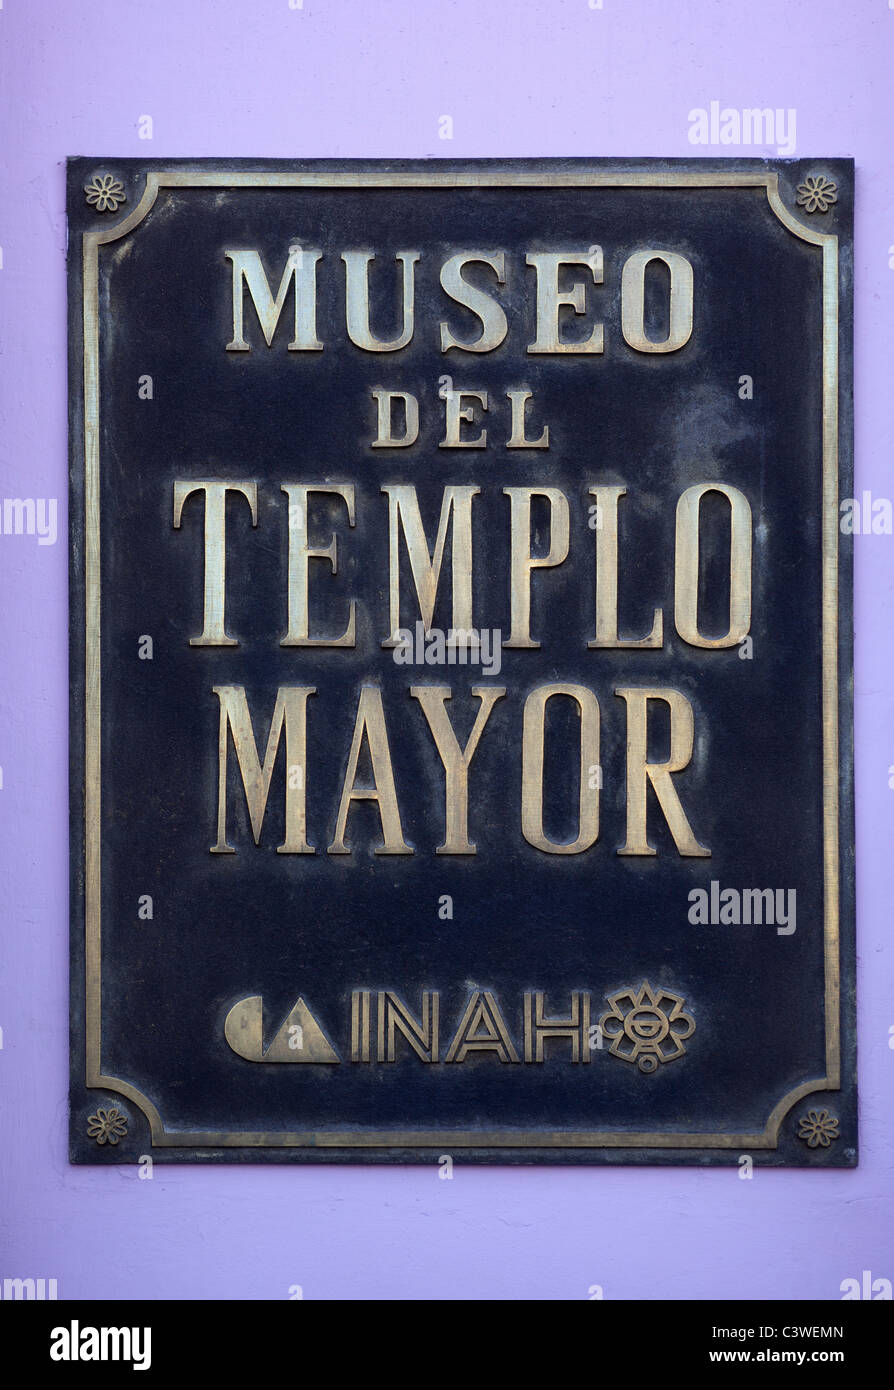 Museo del Templo Mayor Mexico City Mexico Stock Photo